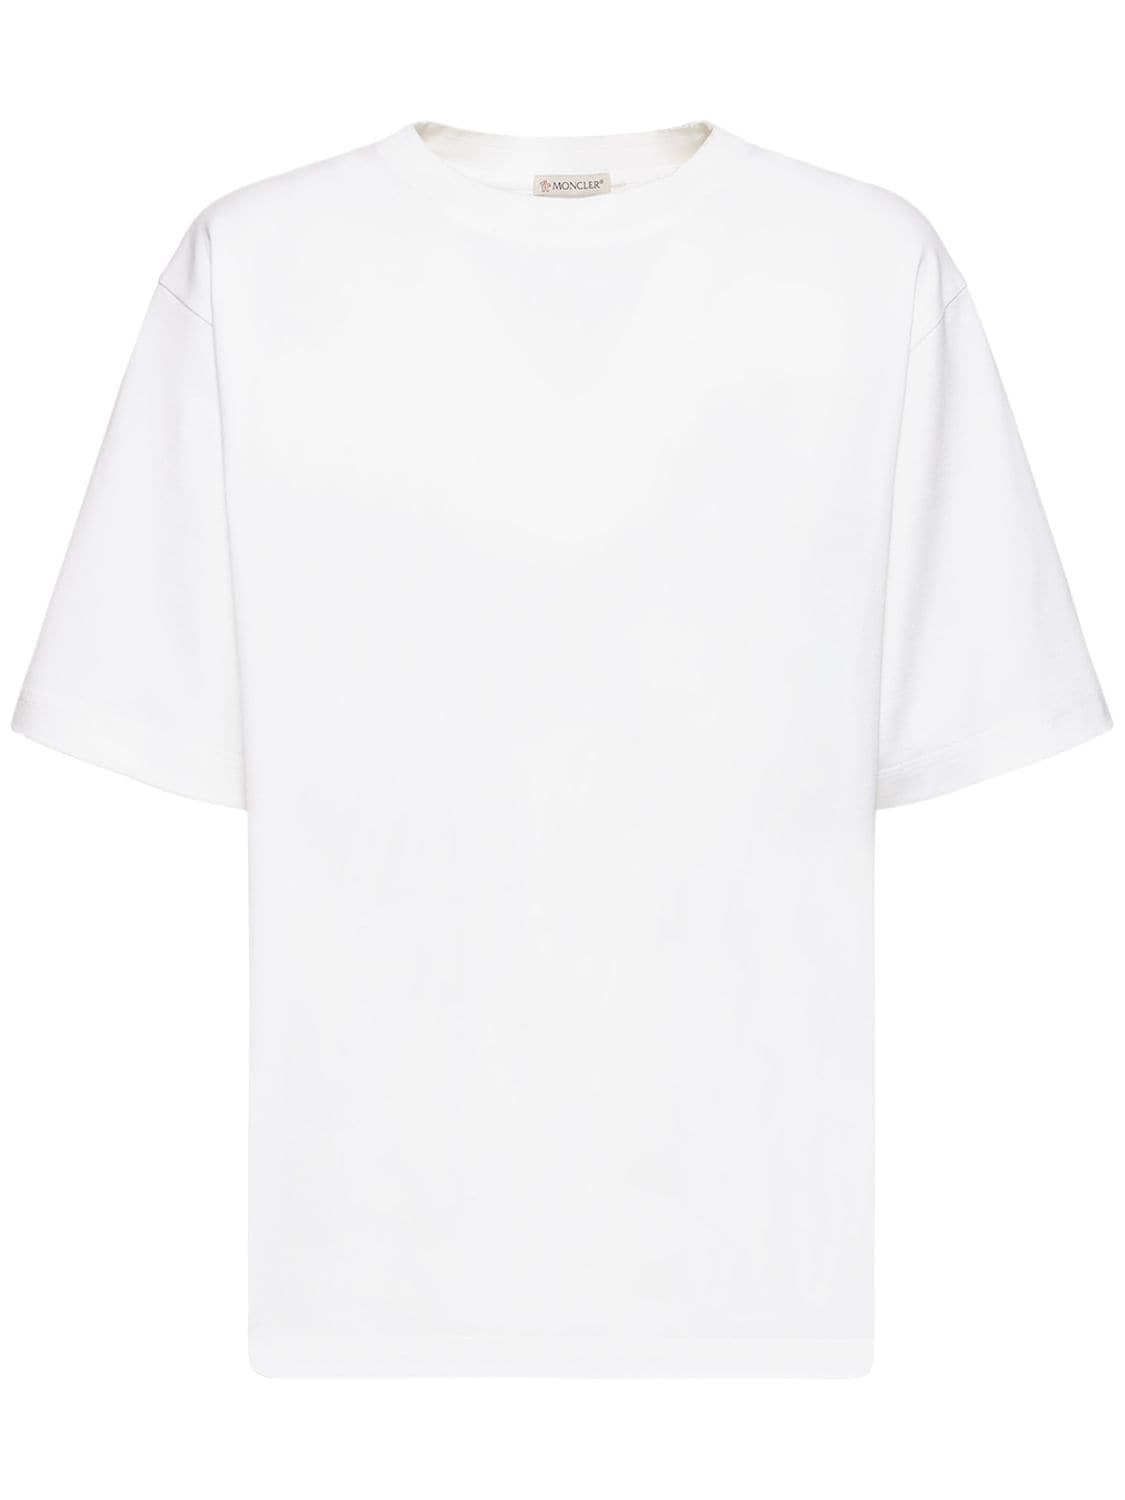 T-shirt En Coton Imprimé Alicia Keys - MONCLER GENIUS - Modalova